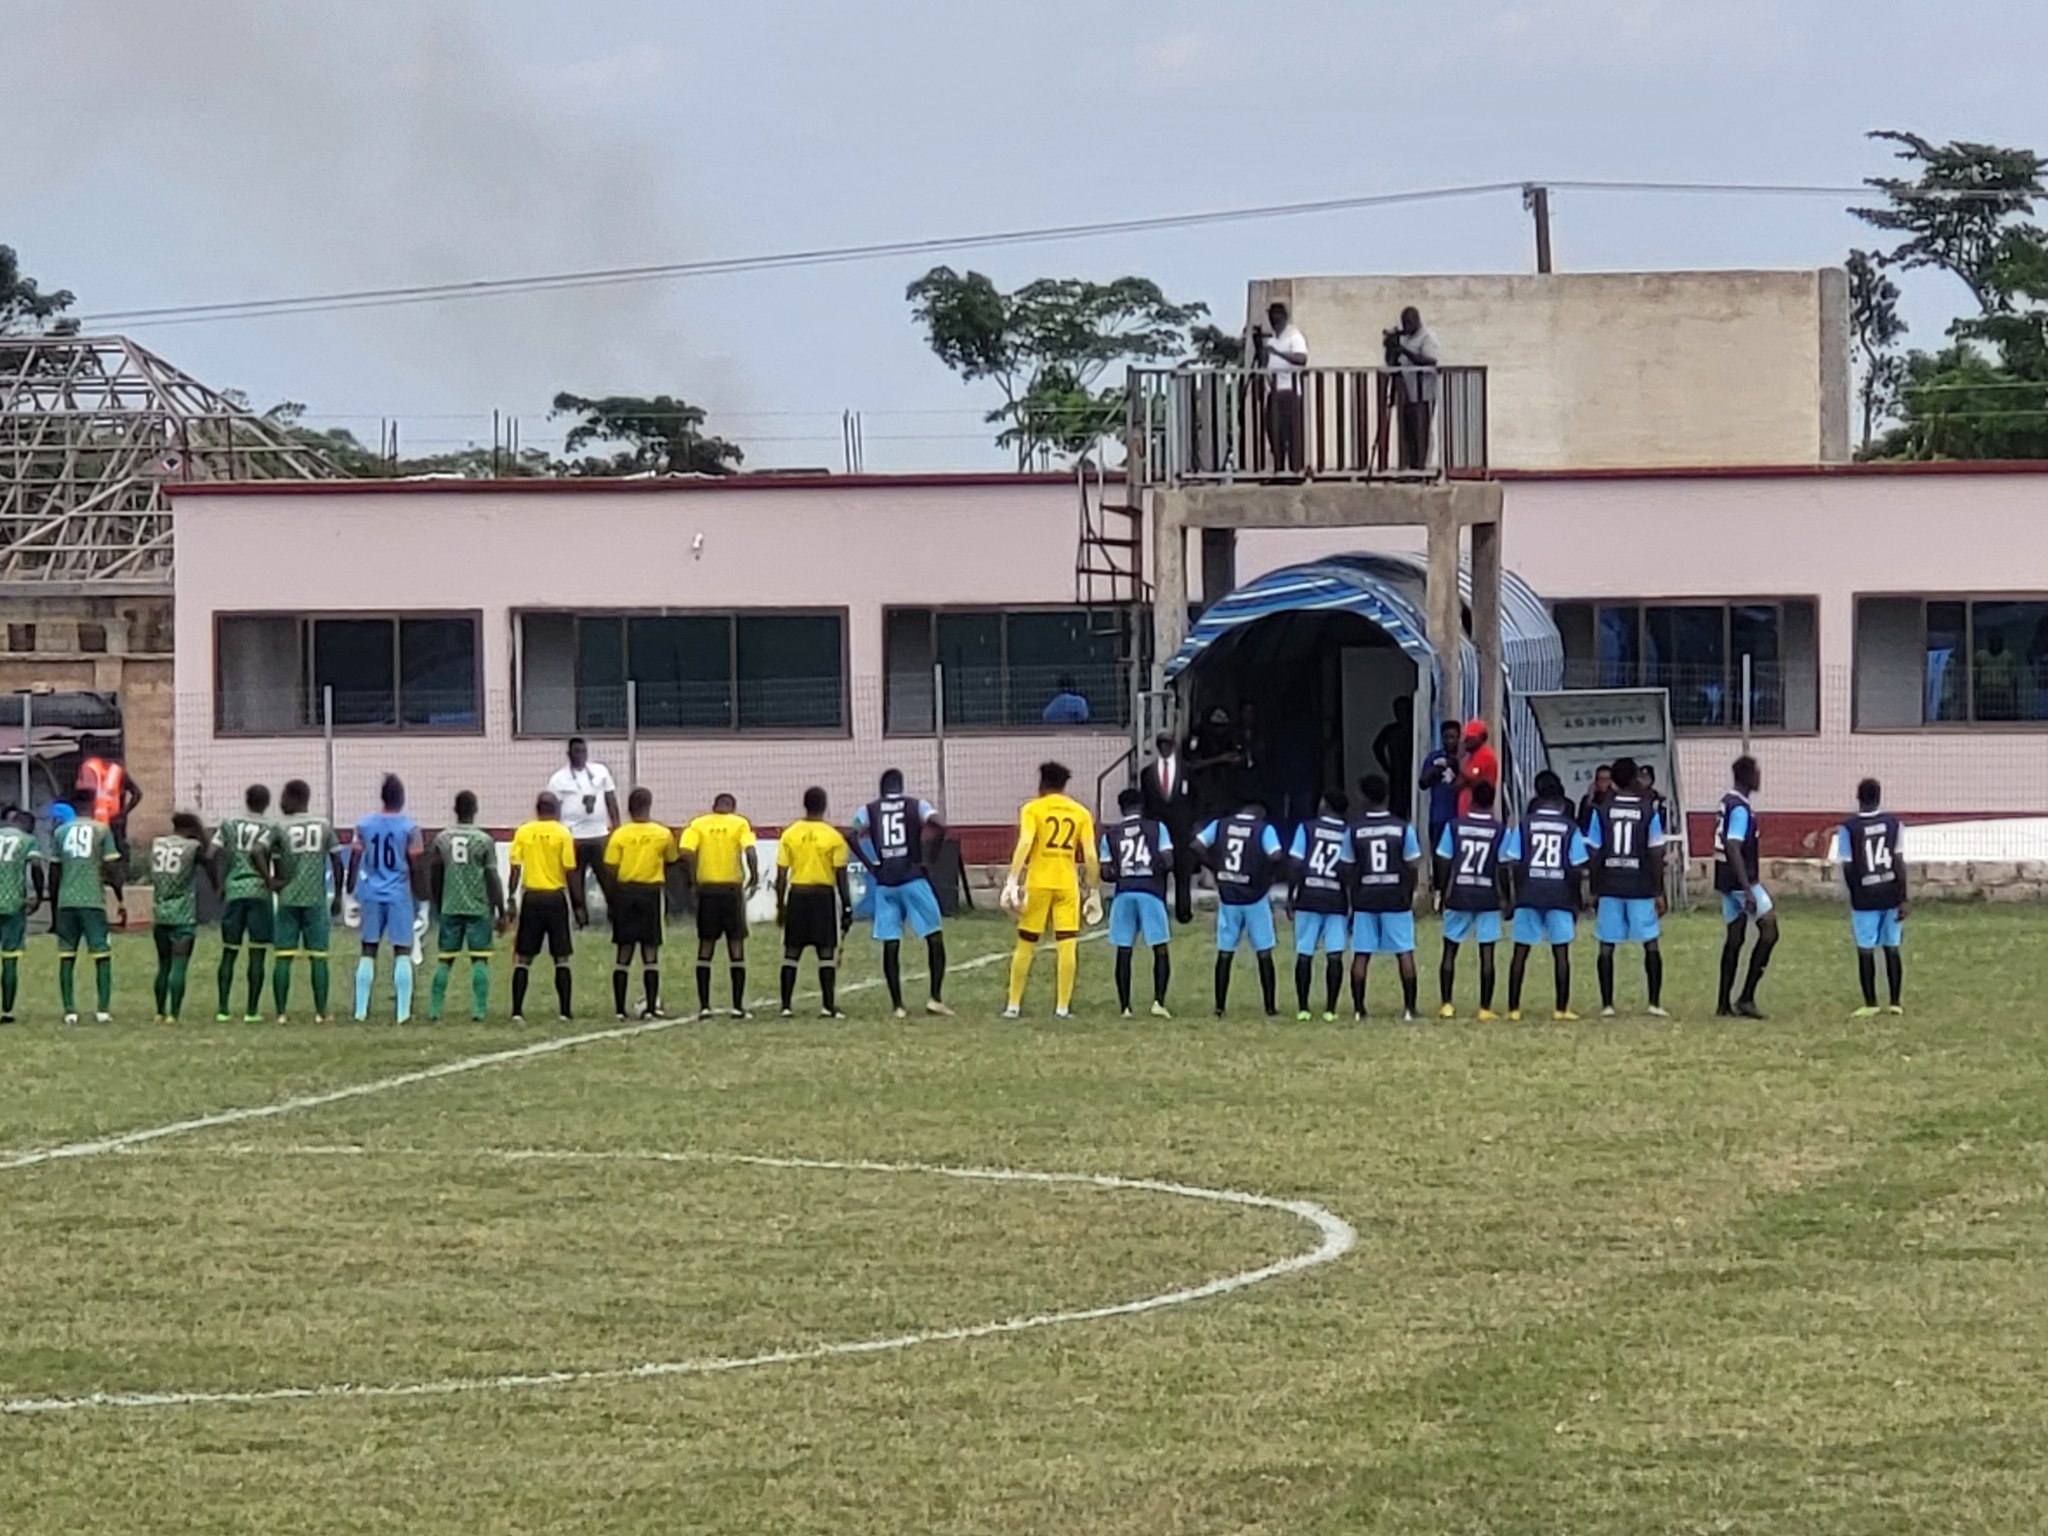 2022/23 Ghana Premier League week 22: Nsoatreman FC 3-0 Accra Lions - Report